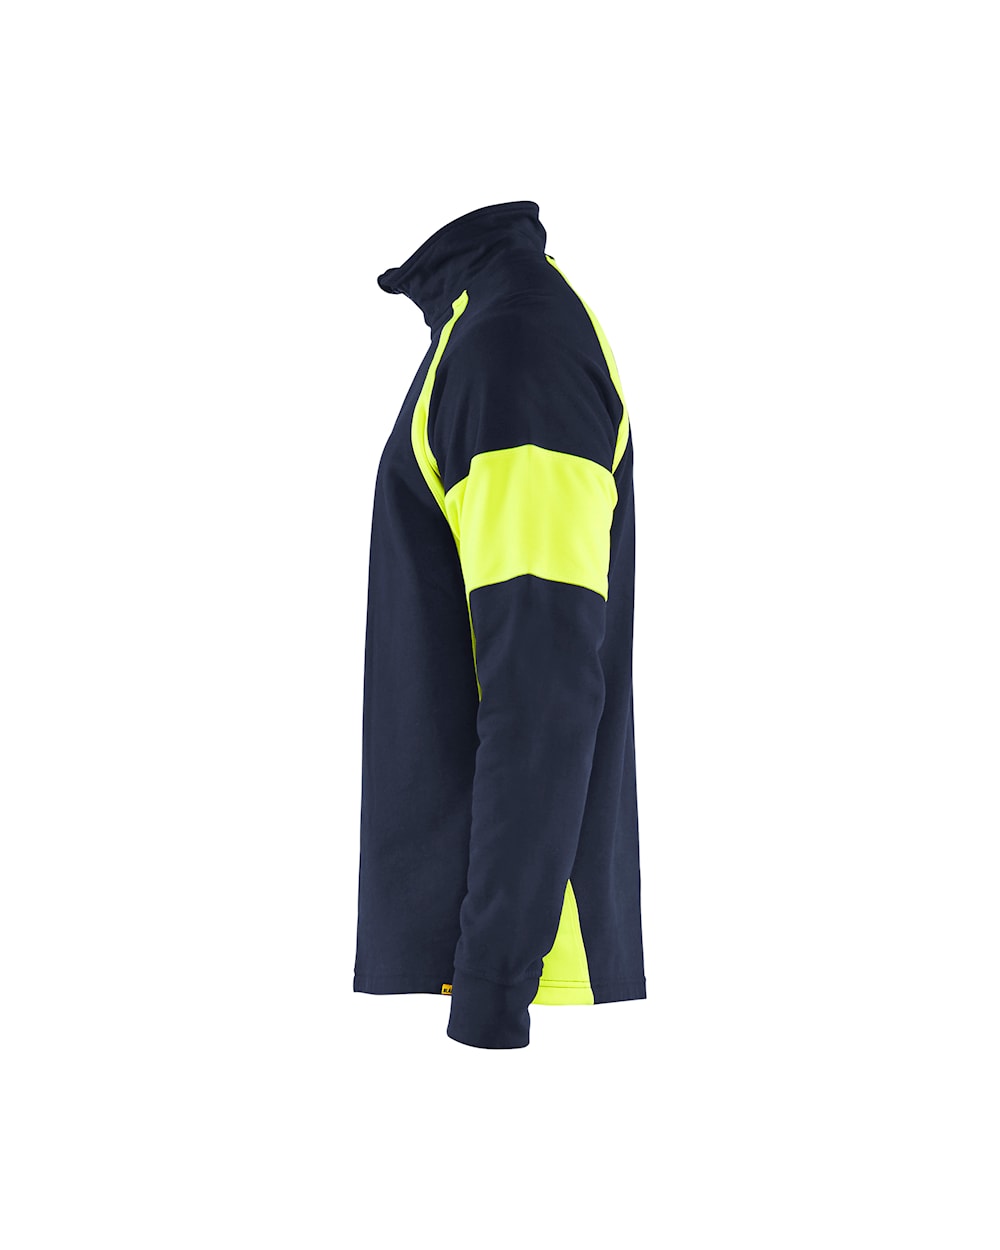 Blaklader Sweatshirt with Hi-Vis Panels 3550 #colour_navy-blue-hi-vis-yellow